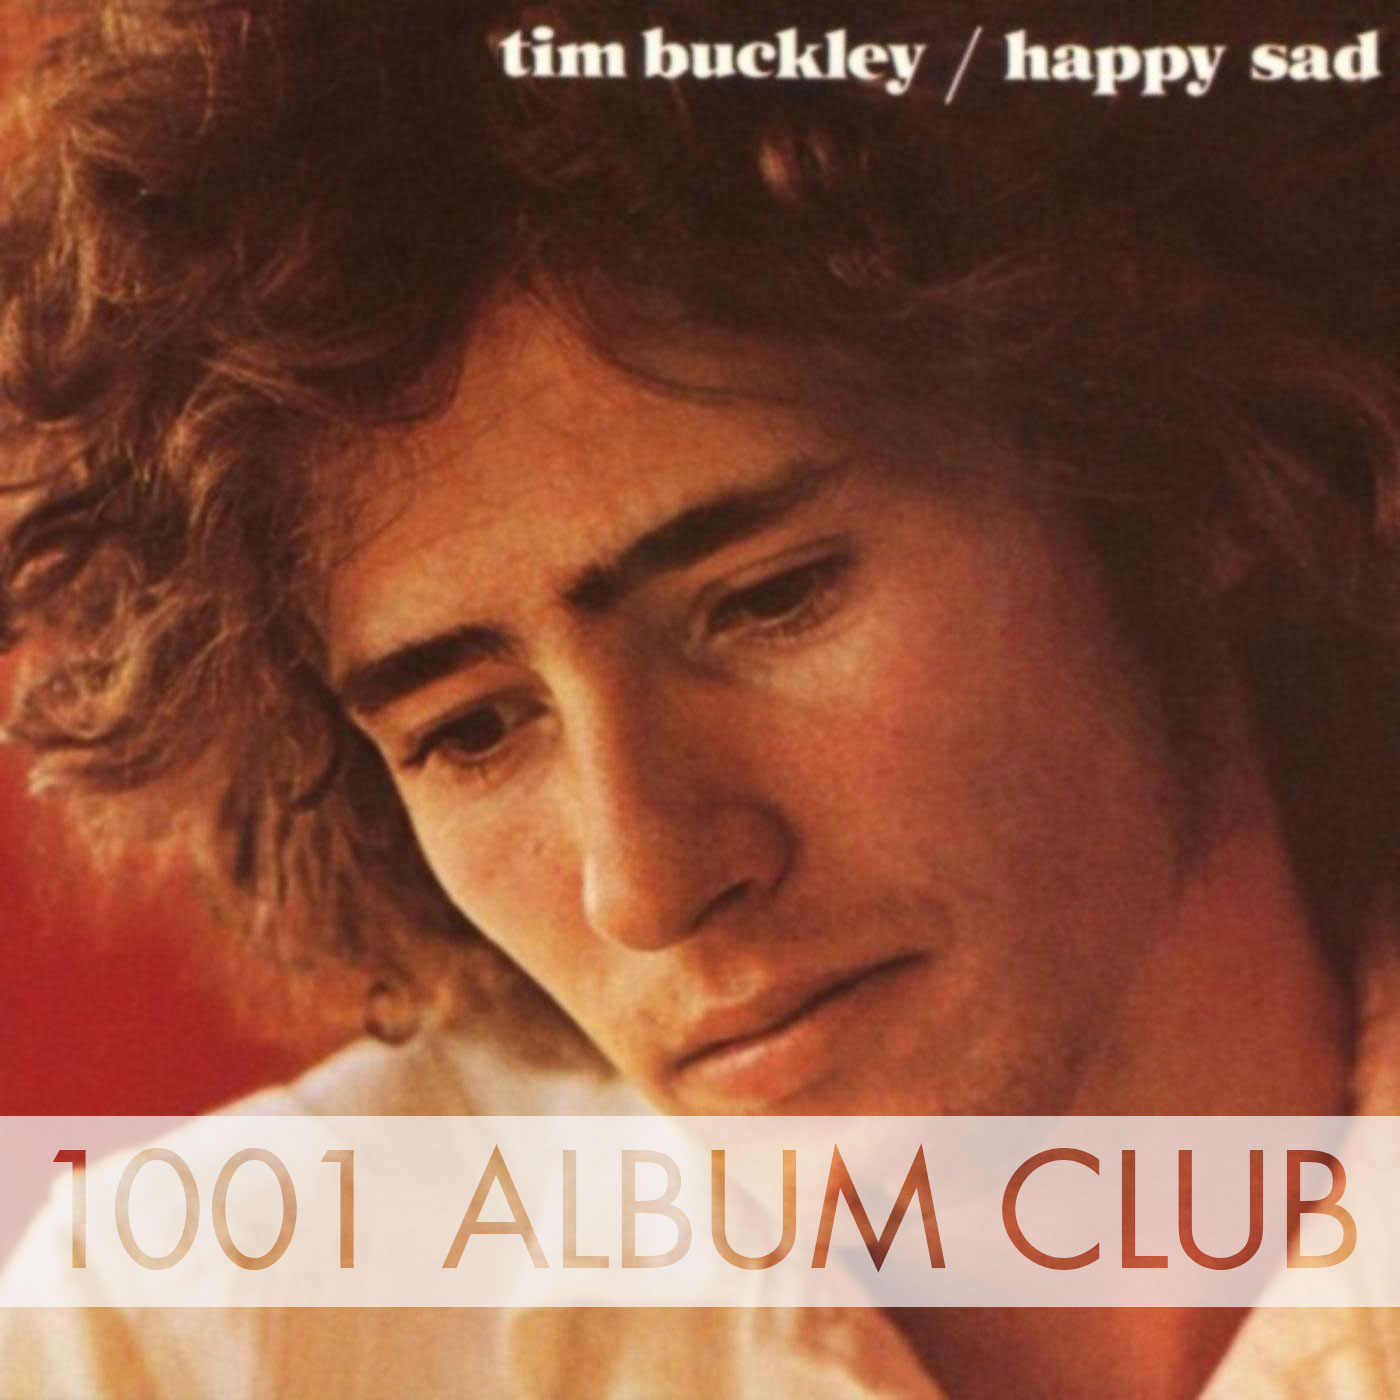 161 Tim Buckley – Happy Sad – 1001 Album Club